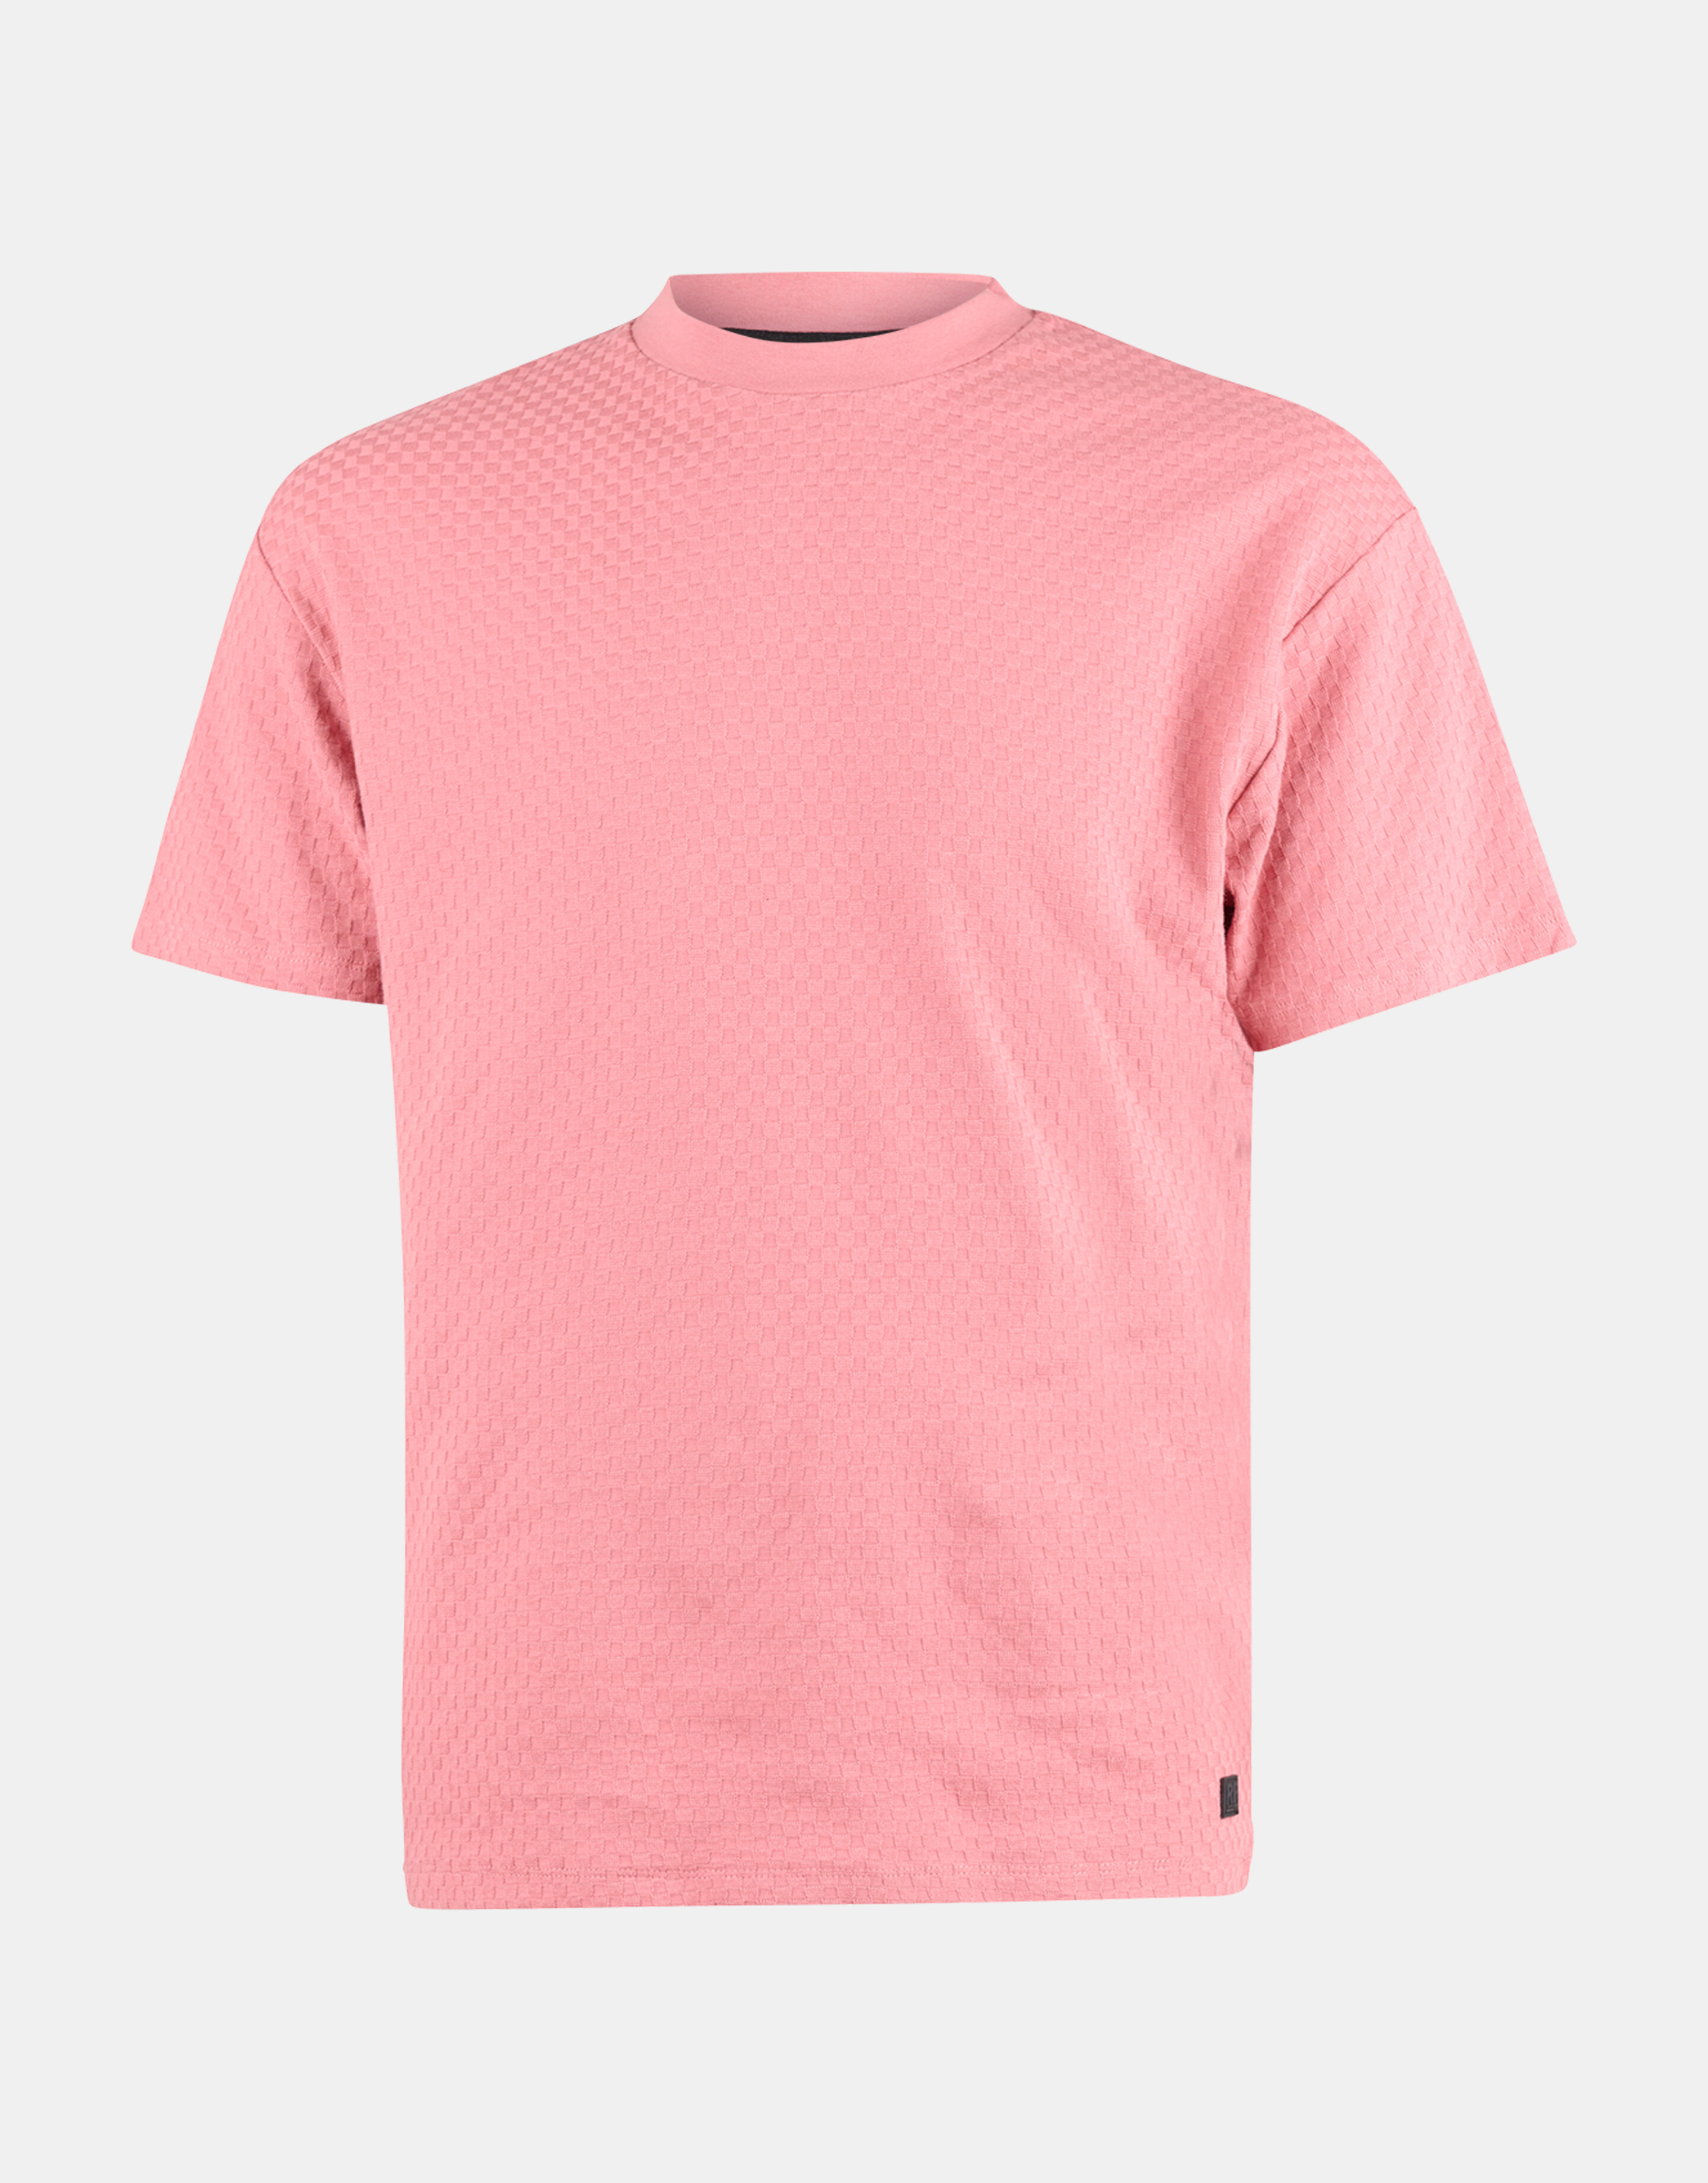 Square T-shirt REFILL